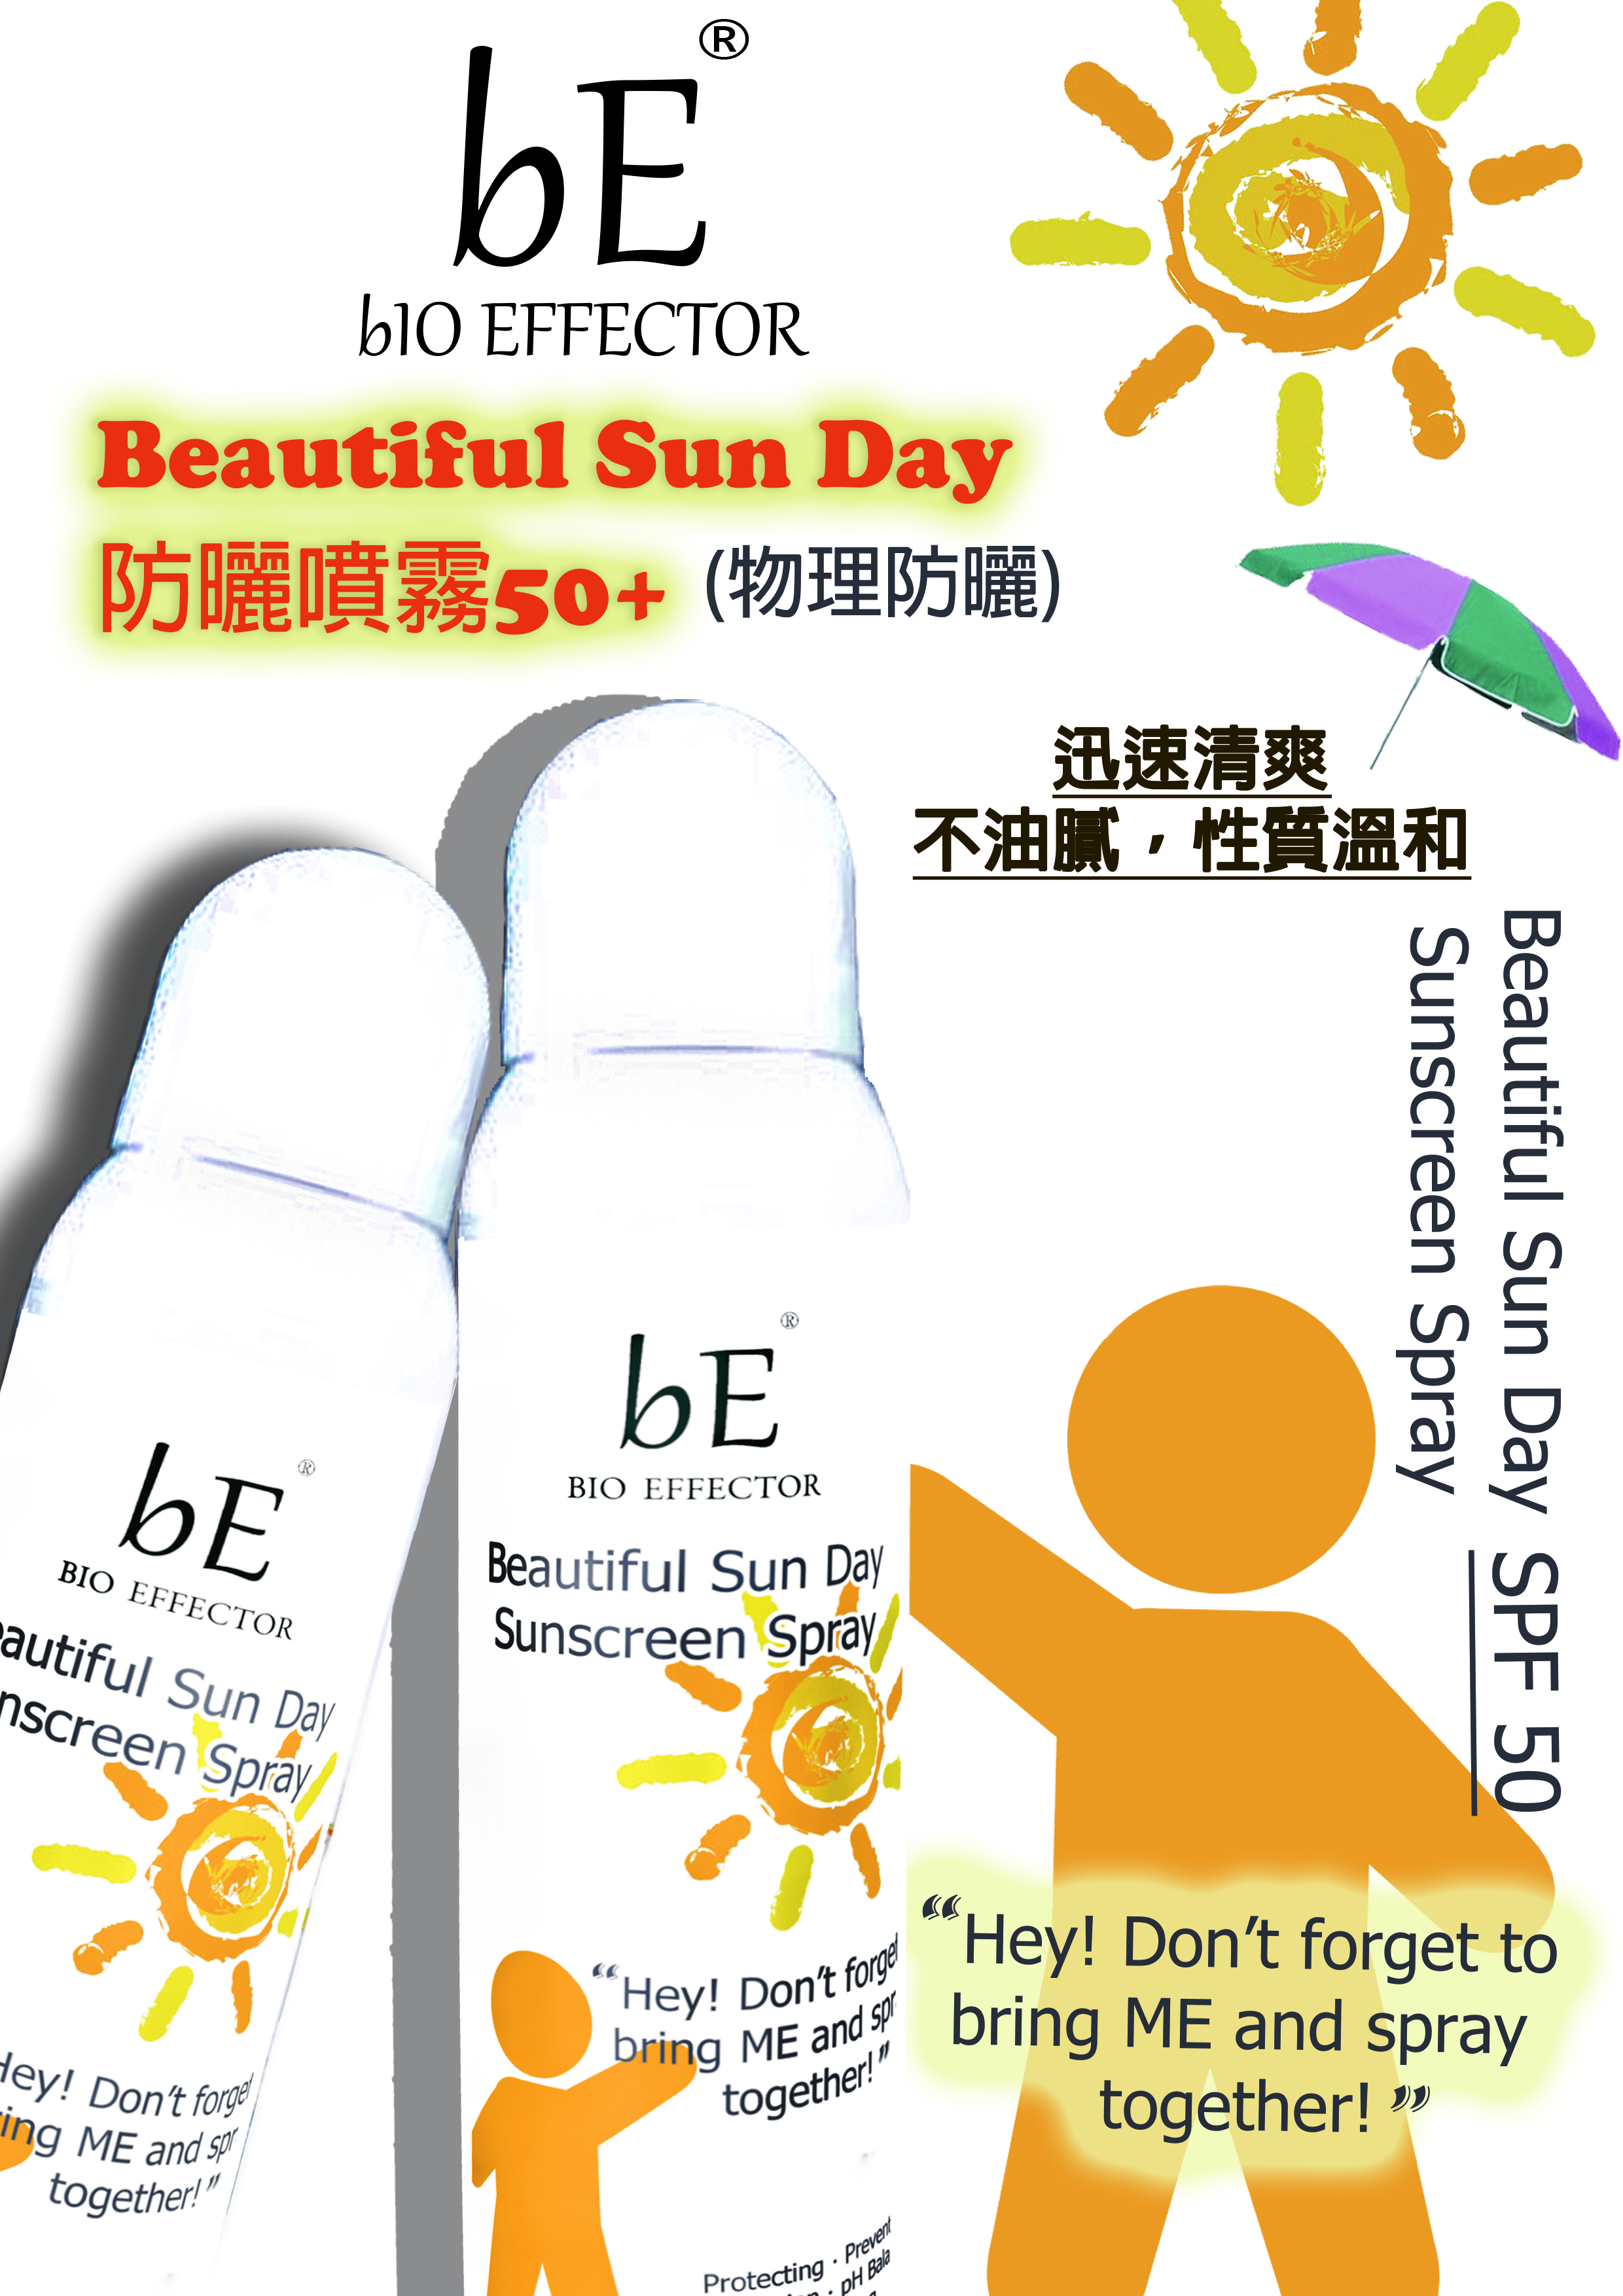 bE Sunscreen Spray A4.jpg